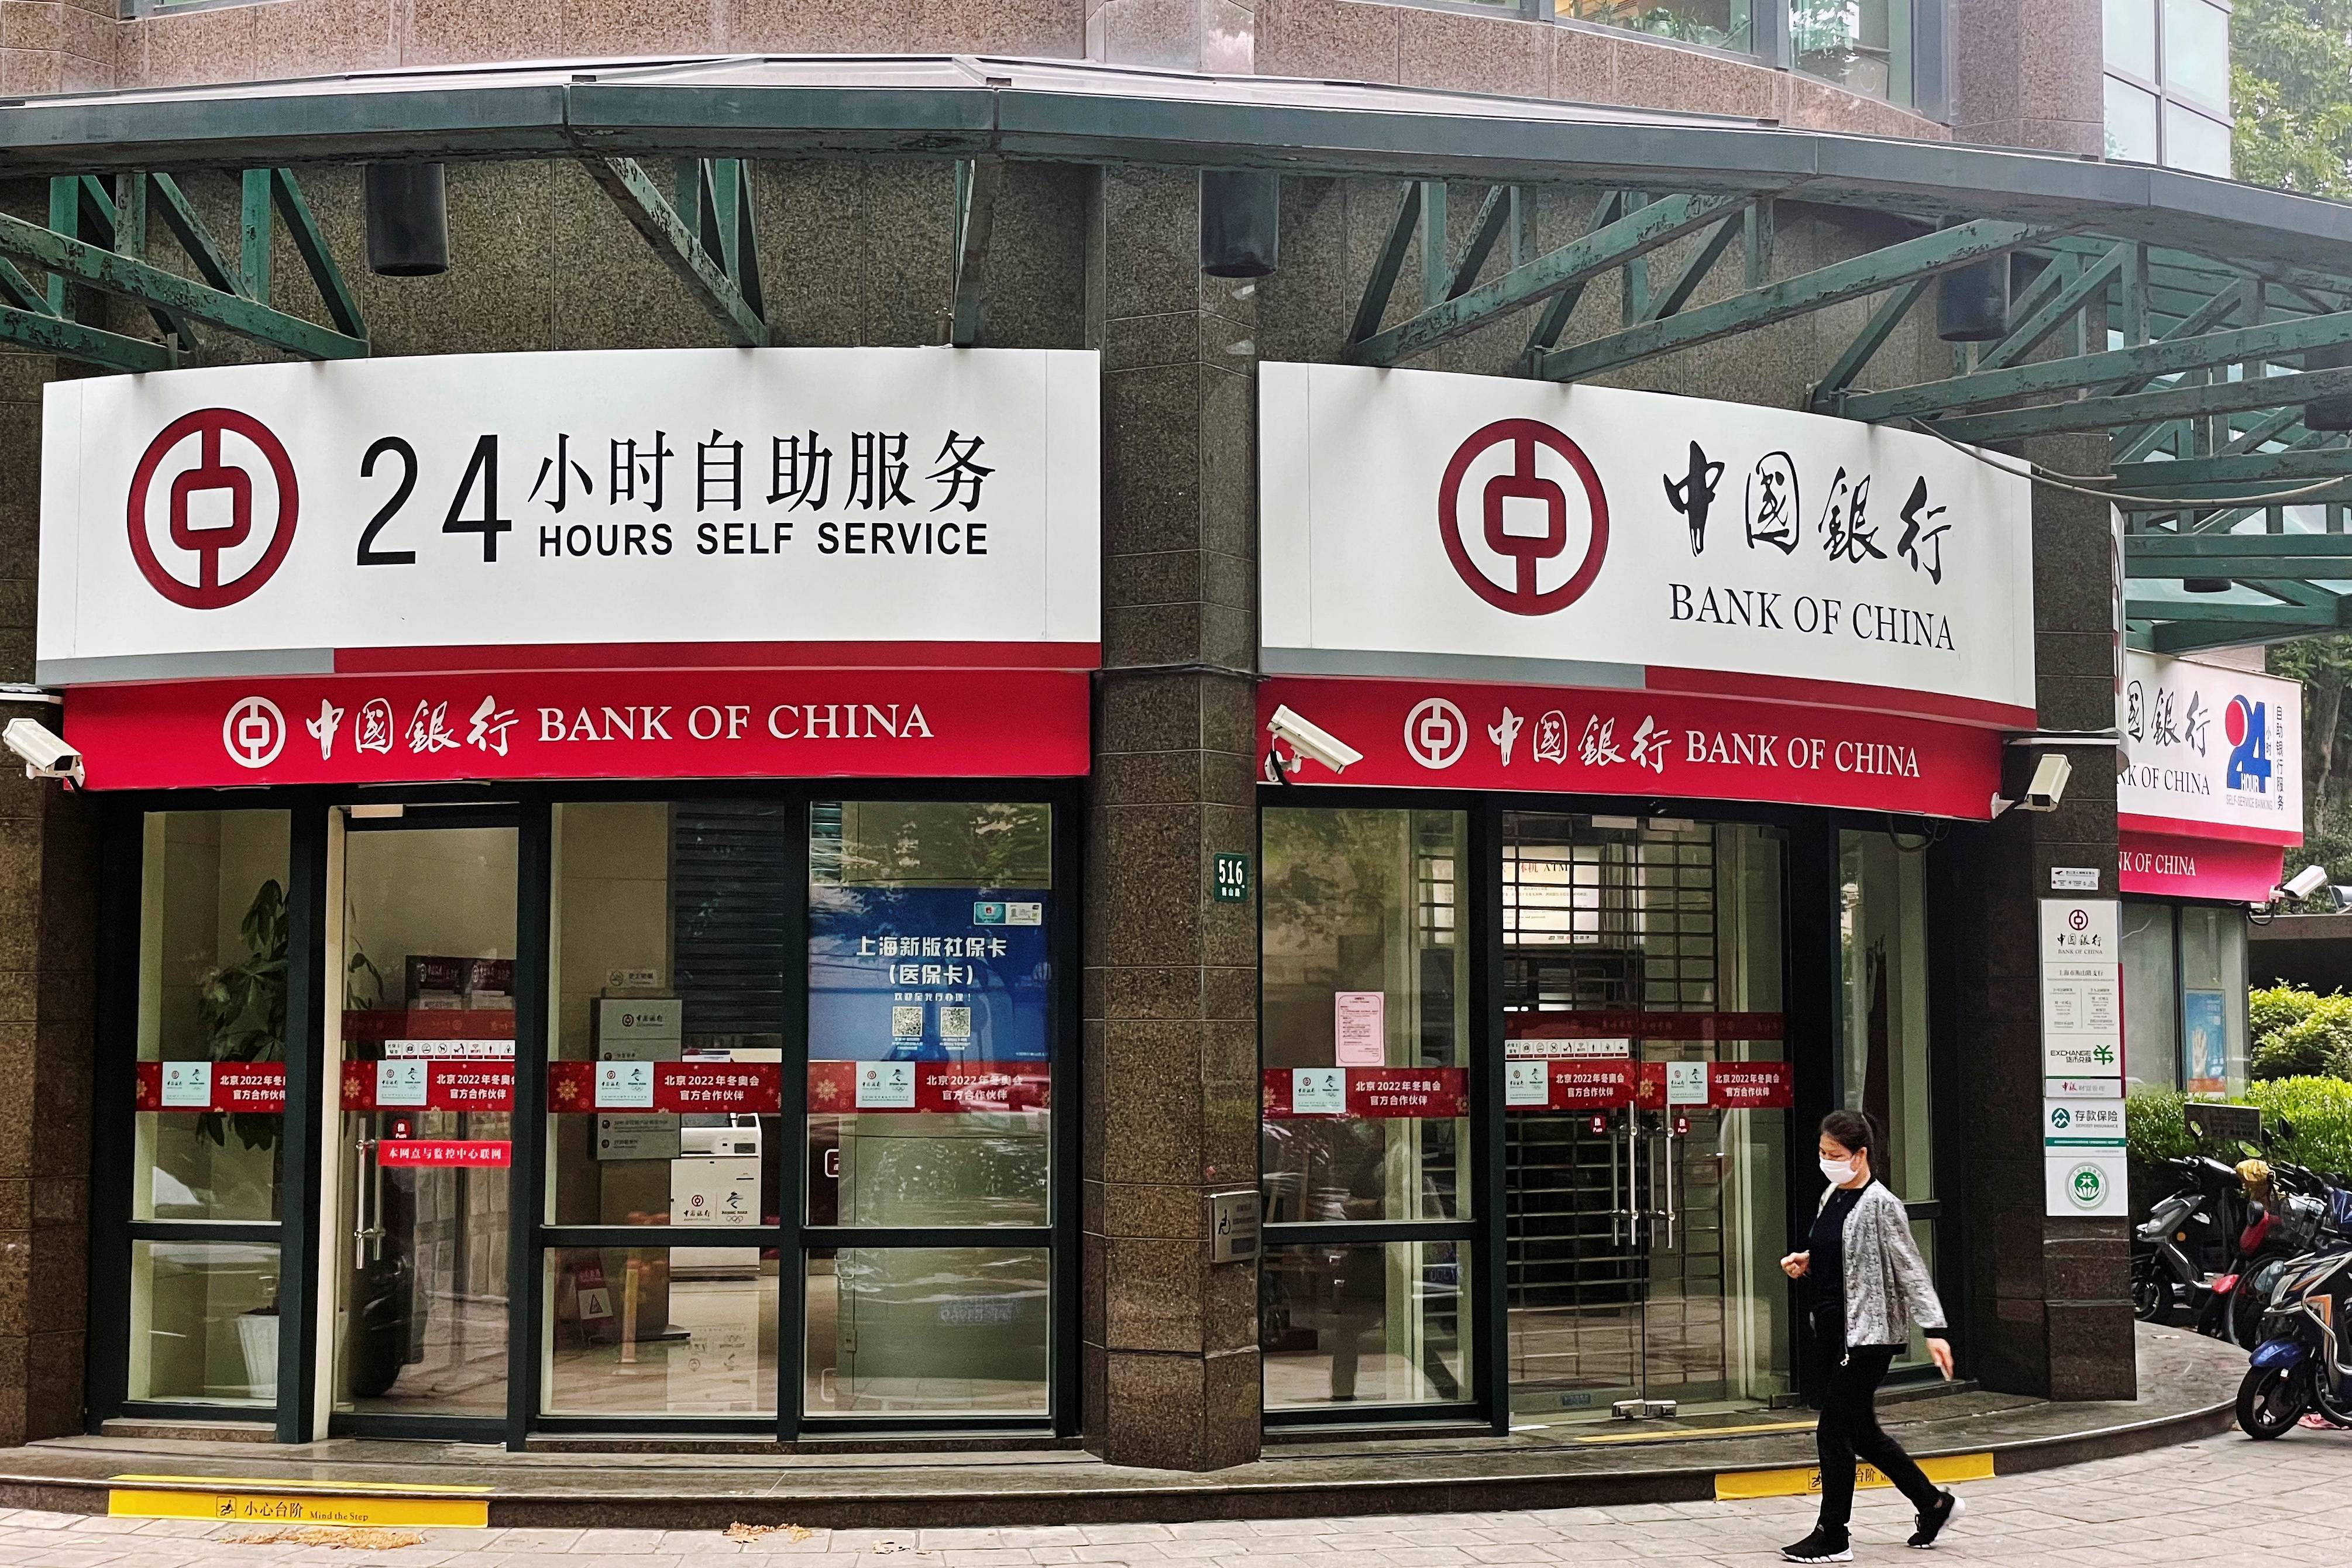 Cnaps bank of china. Банк Китая. Everbright банк Китай. Реклама Bank of China. Китайский банк Chouzhou.